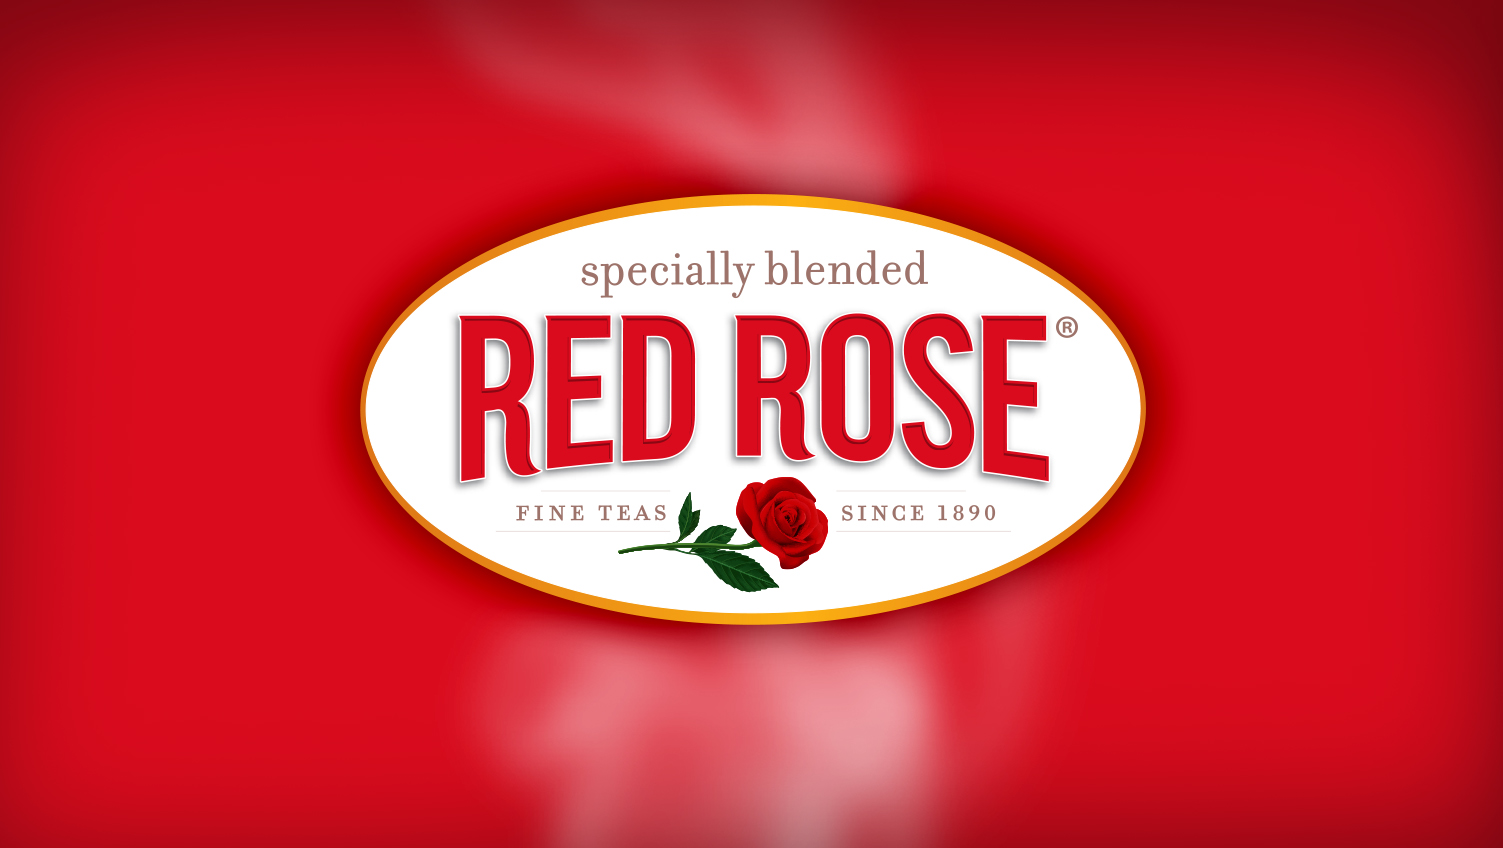 Red Rose Tea - Wikipedia